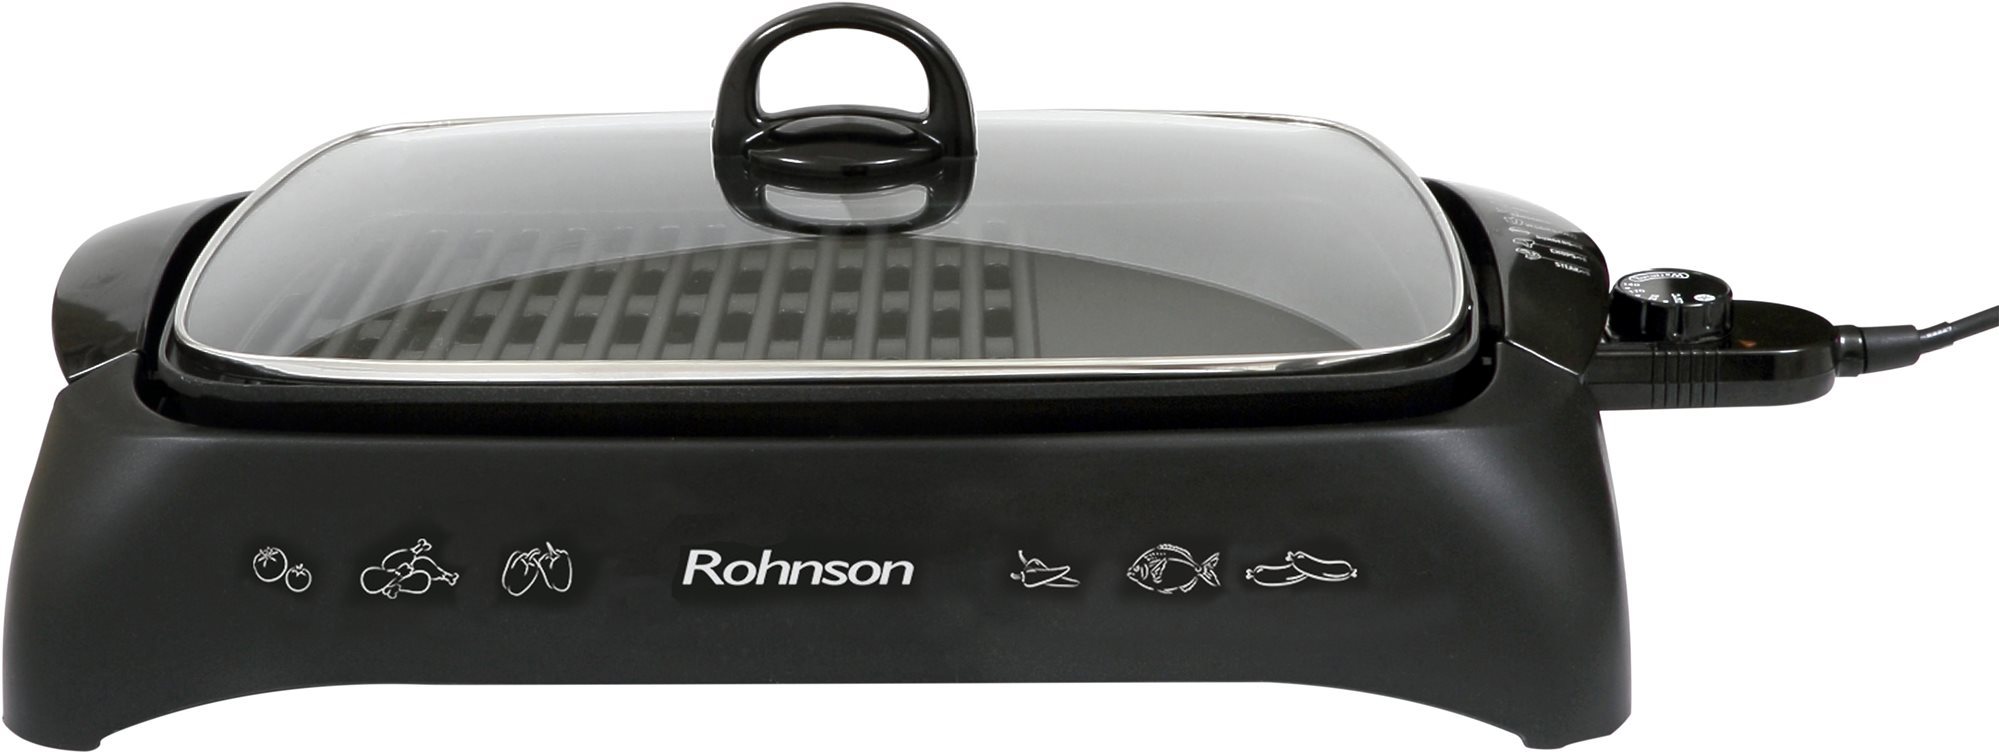 ROHNSON R-250